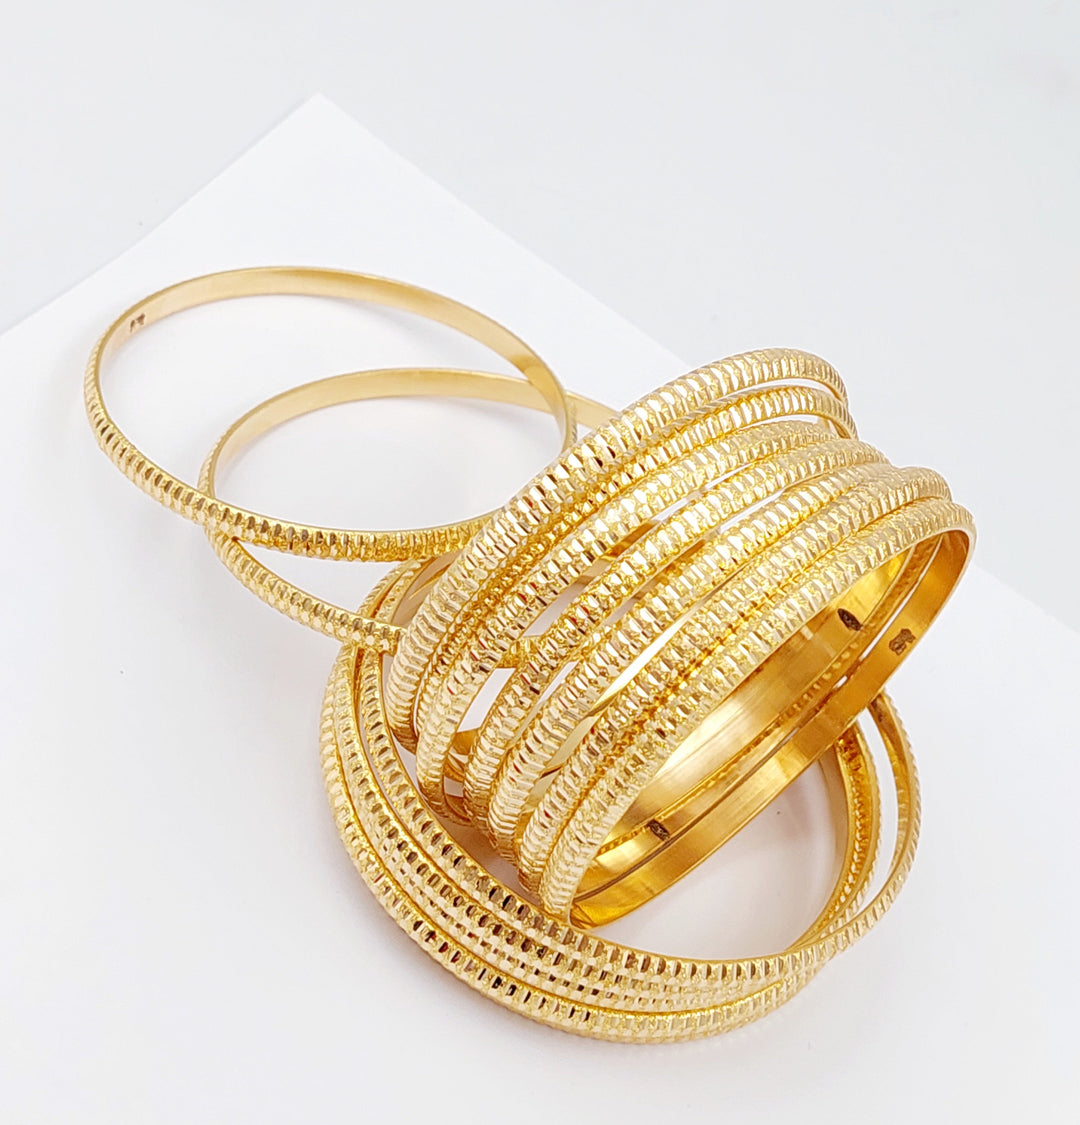 21K Gold Thin Laser Bangle by Saeed Jewelry - Image 1